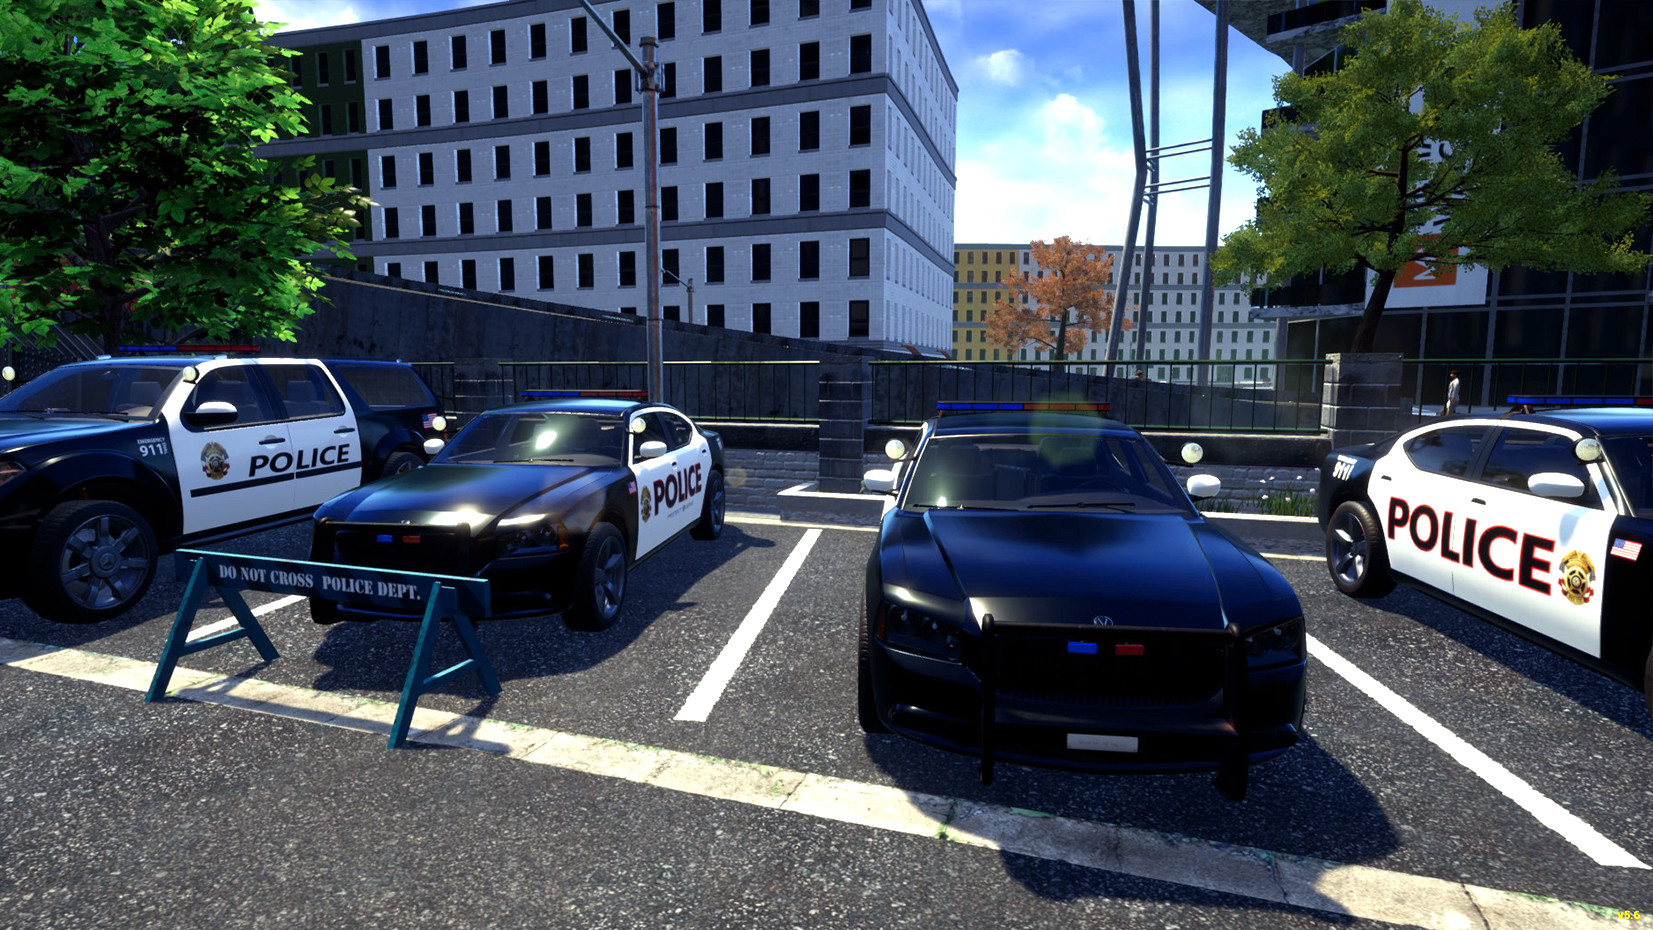 Police Simulator Patrol Duty On Steam - roblox police simulator